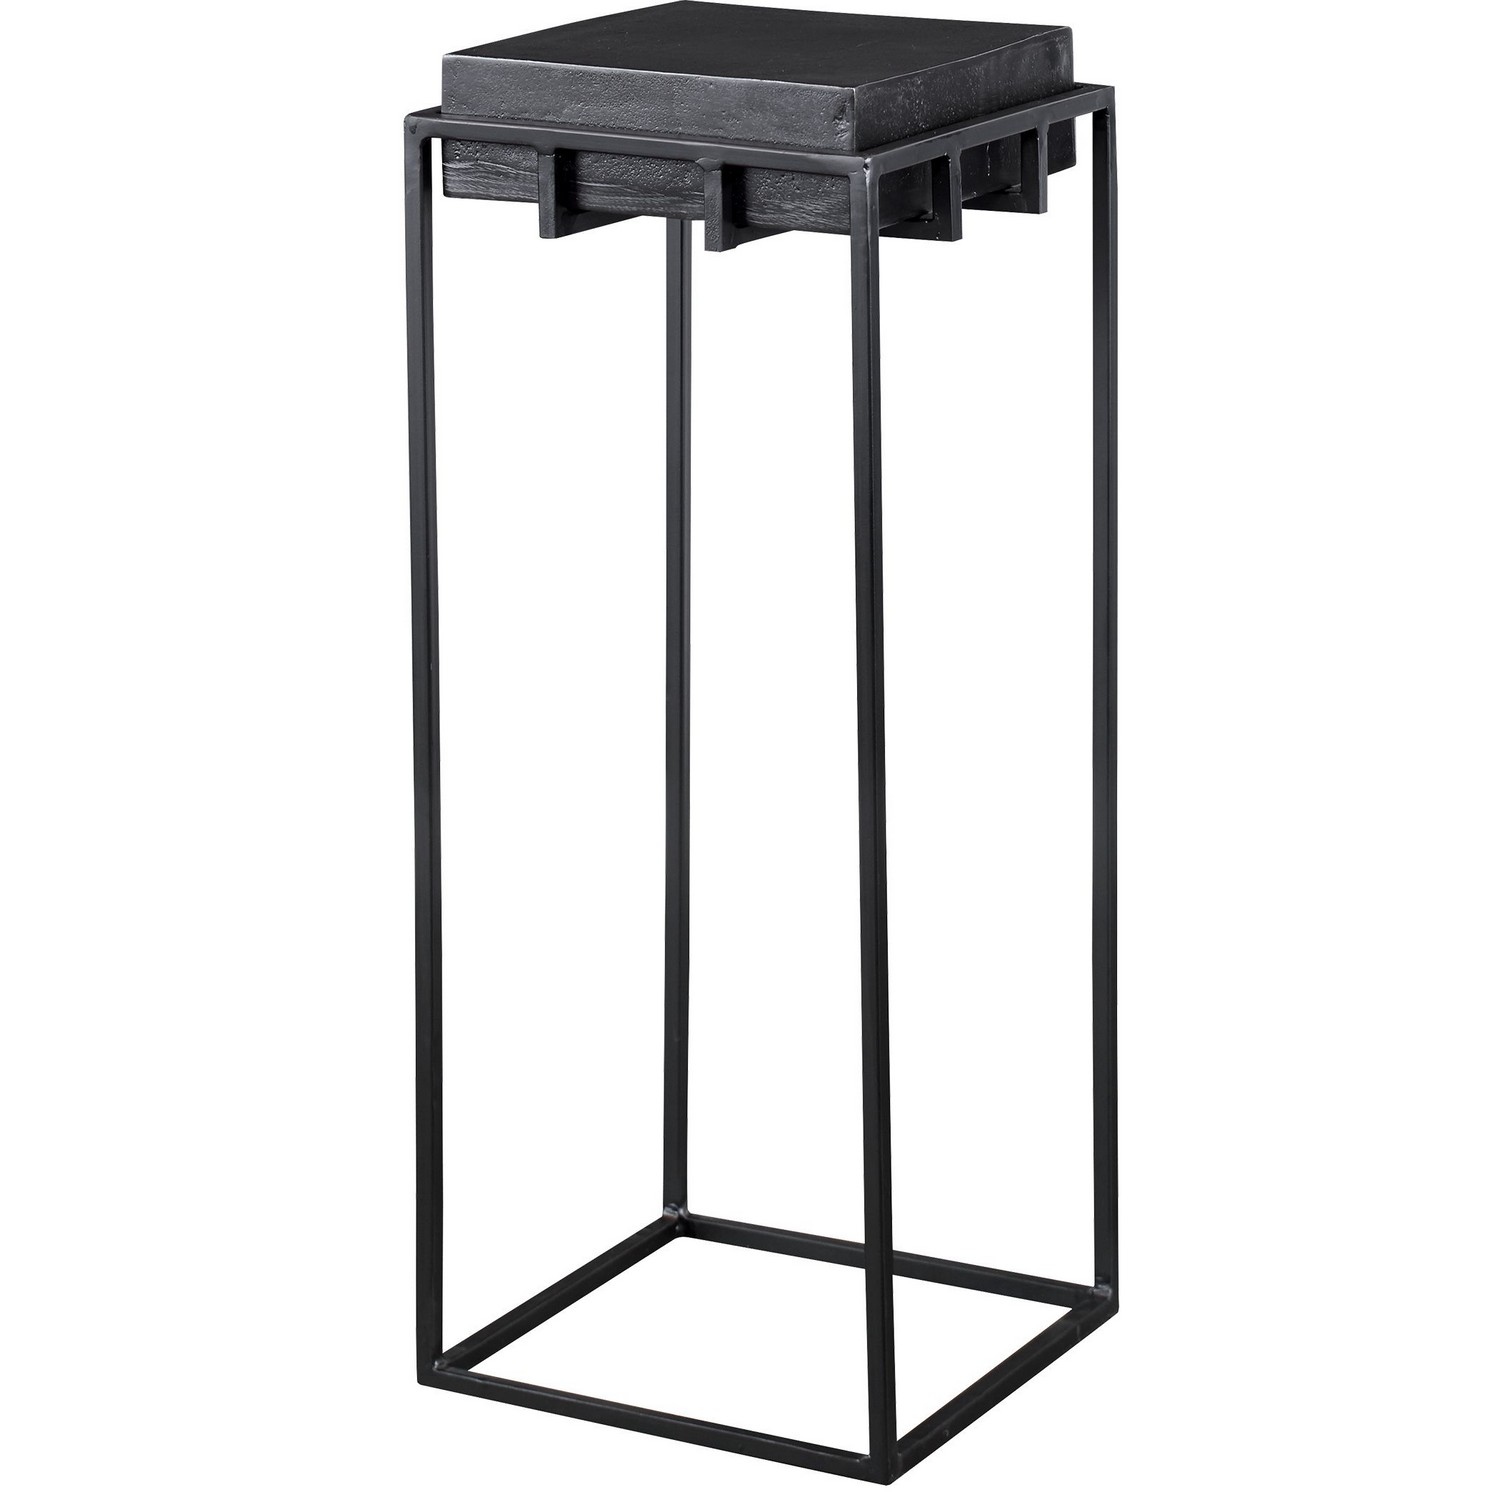 Uttermost Telone Small Pedestal Table - Black